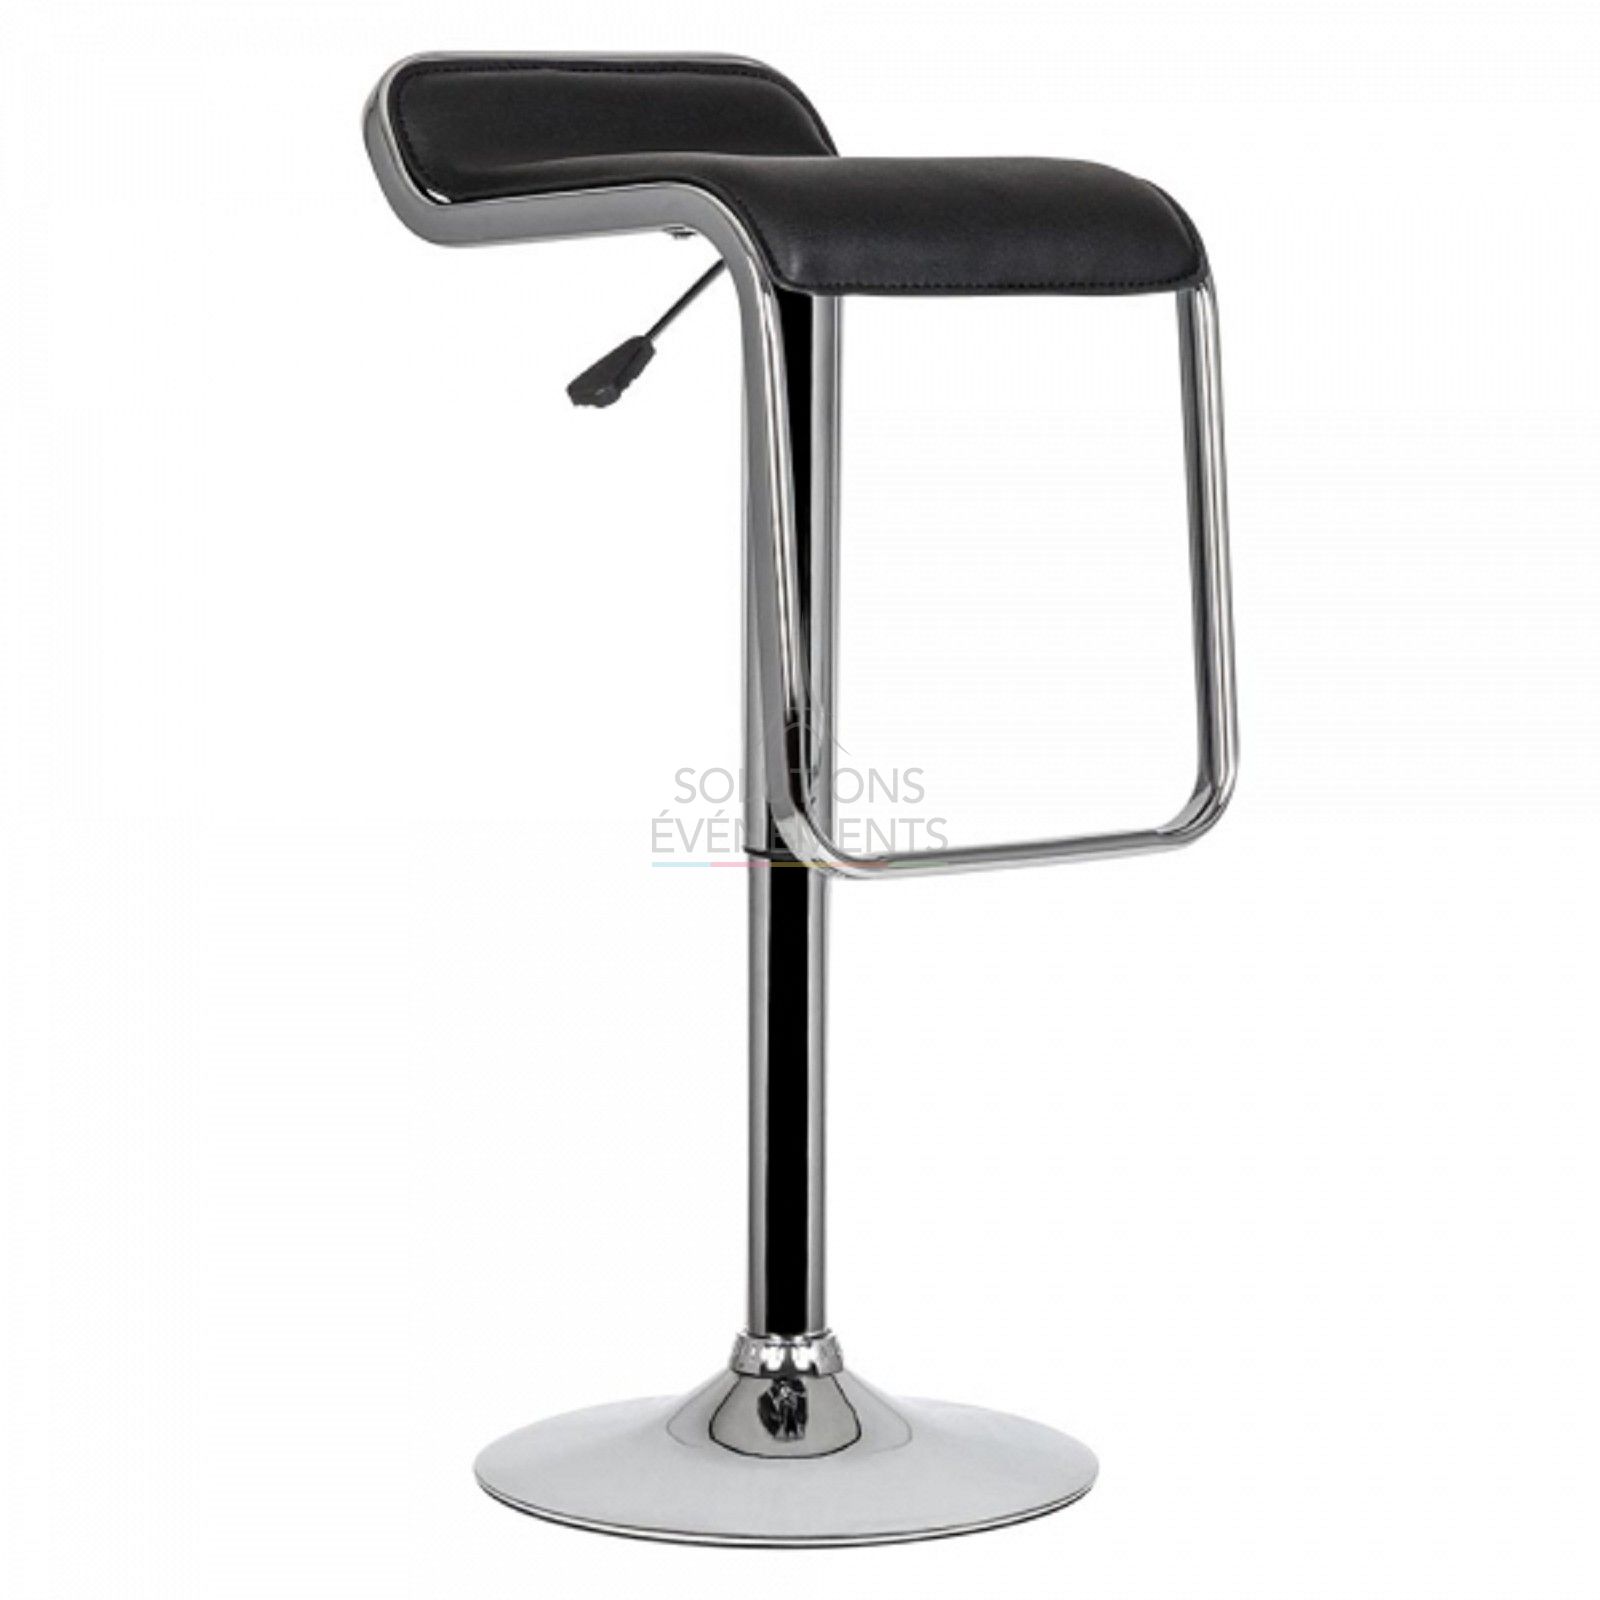 Rental of black bar stool